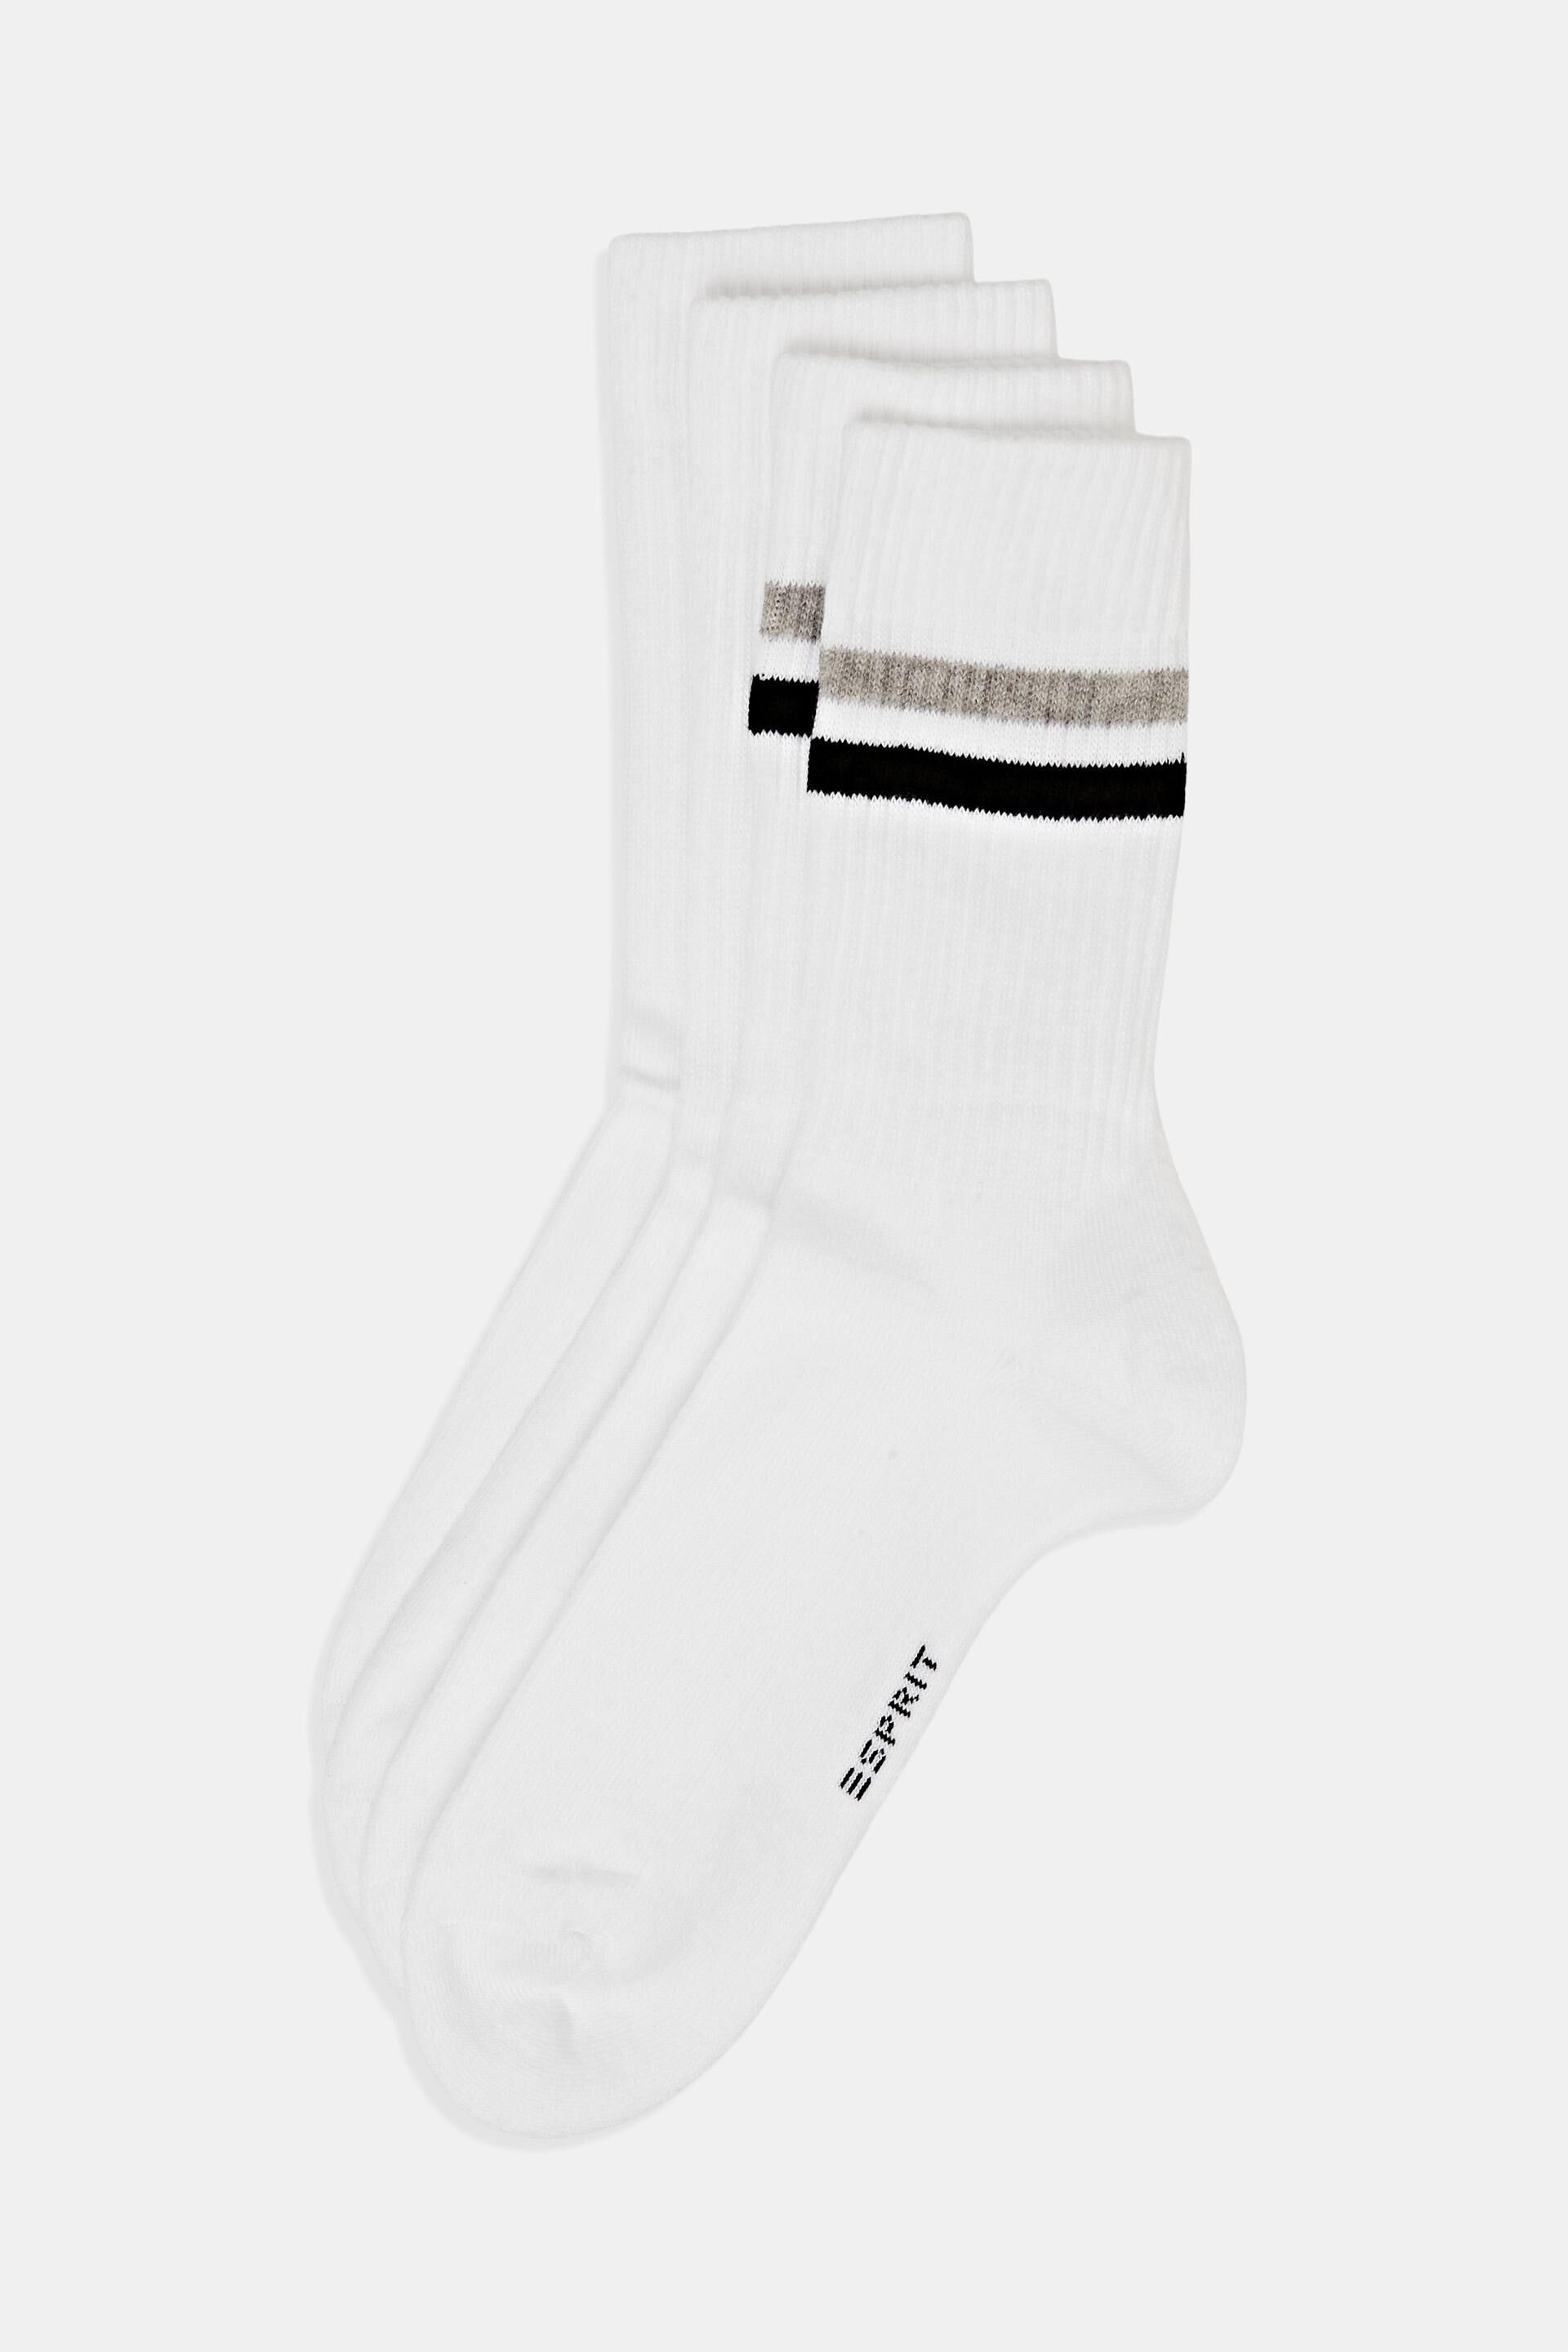 Esprit athletic cotton socks, 2-pack of organic